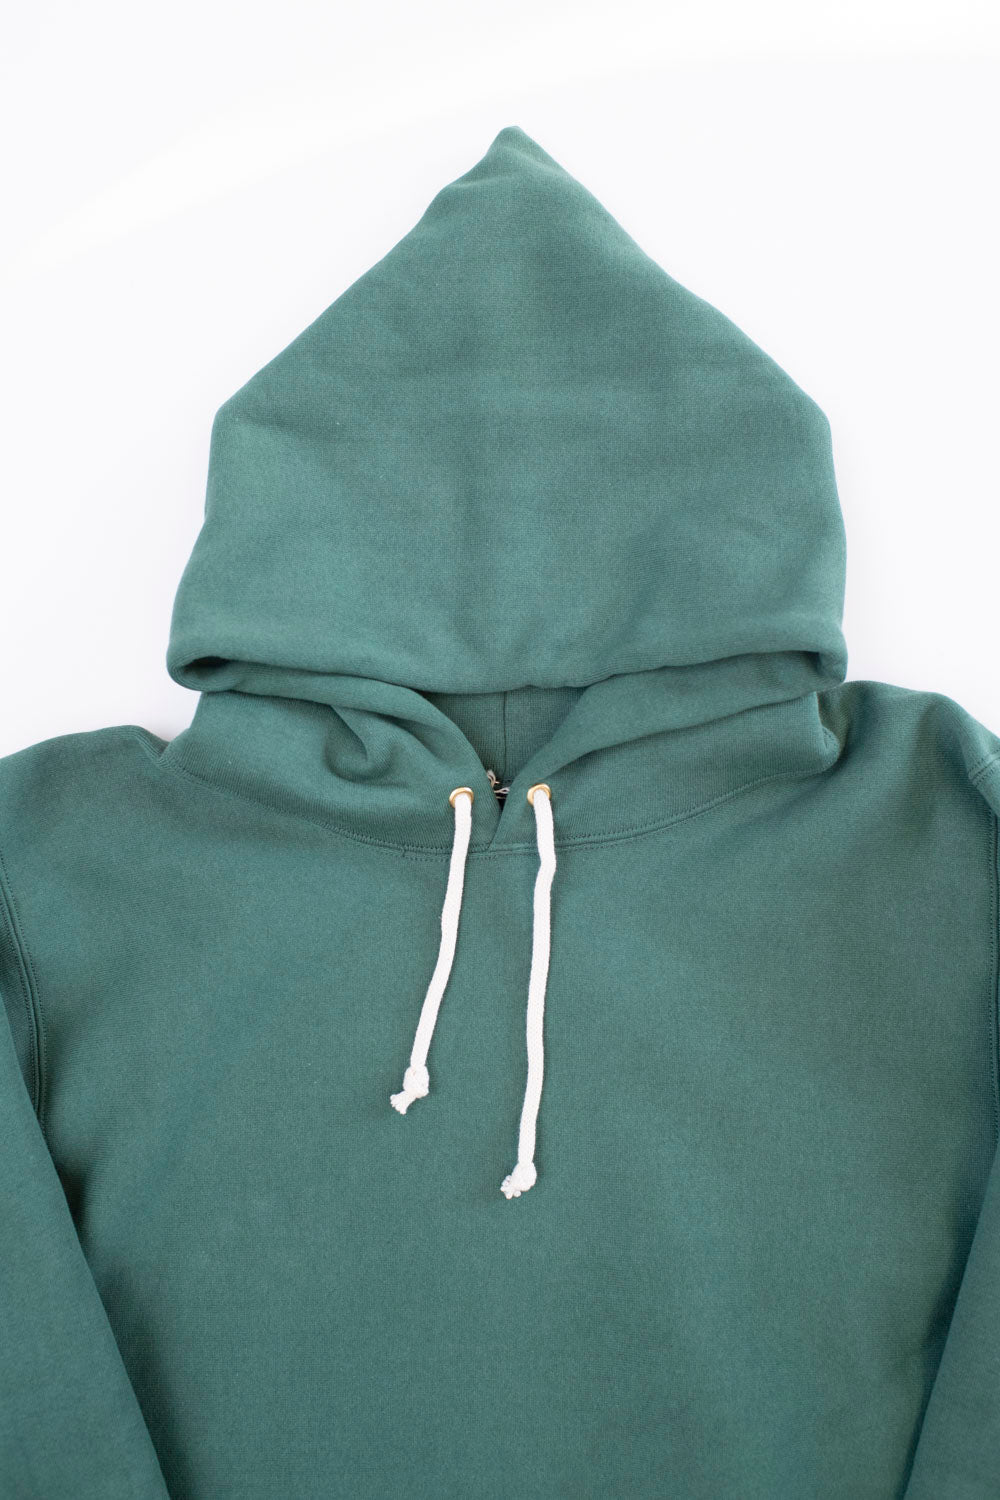 Lot 484 - Heavyweight Hooded Sweatshirt Plain - Green